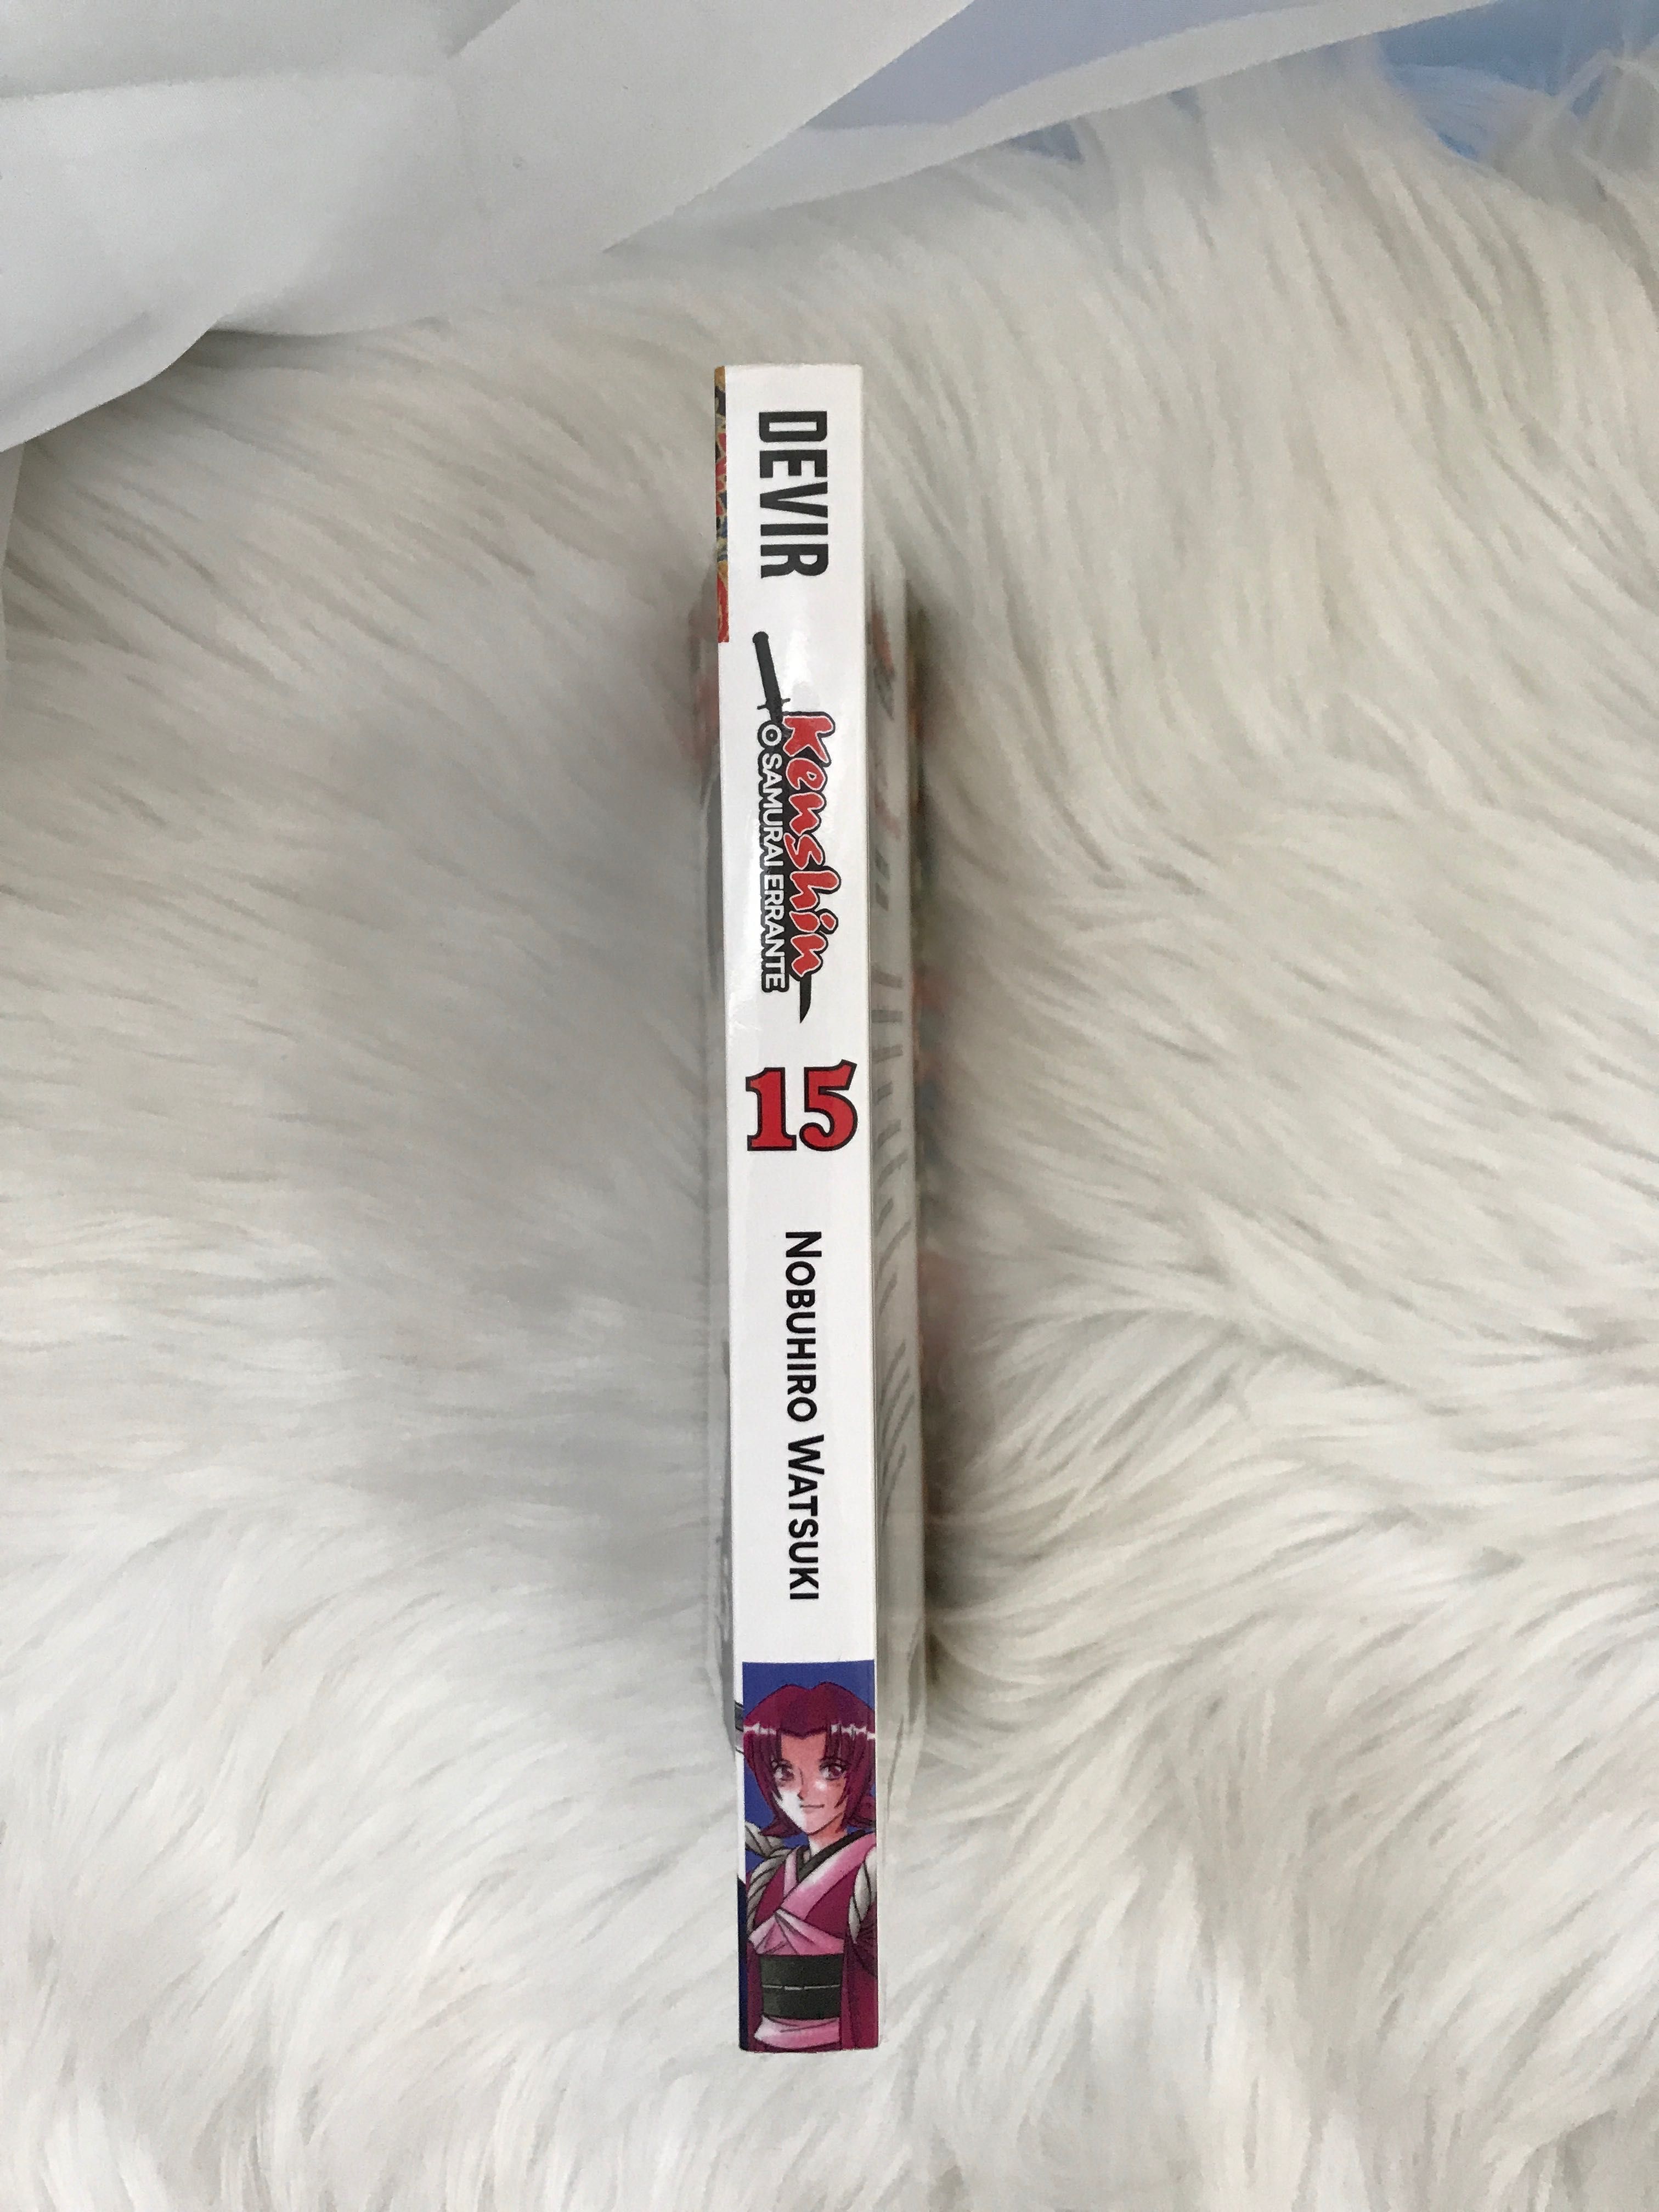 Manga “Kenshin:O Samurai Errante”